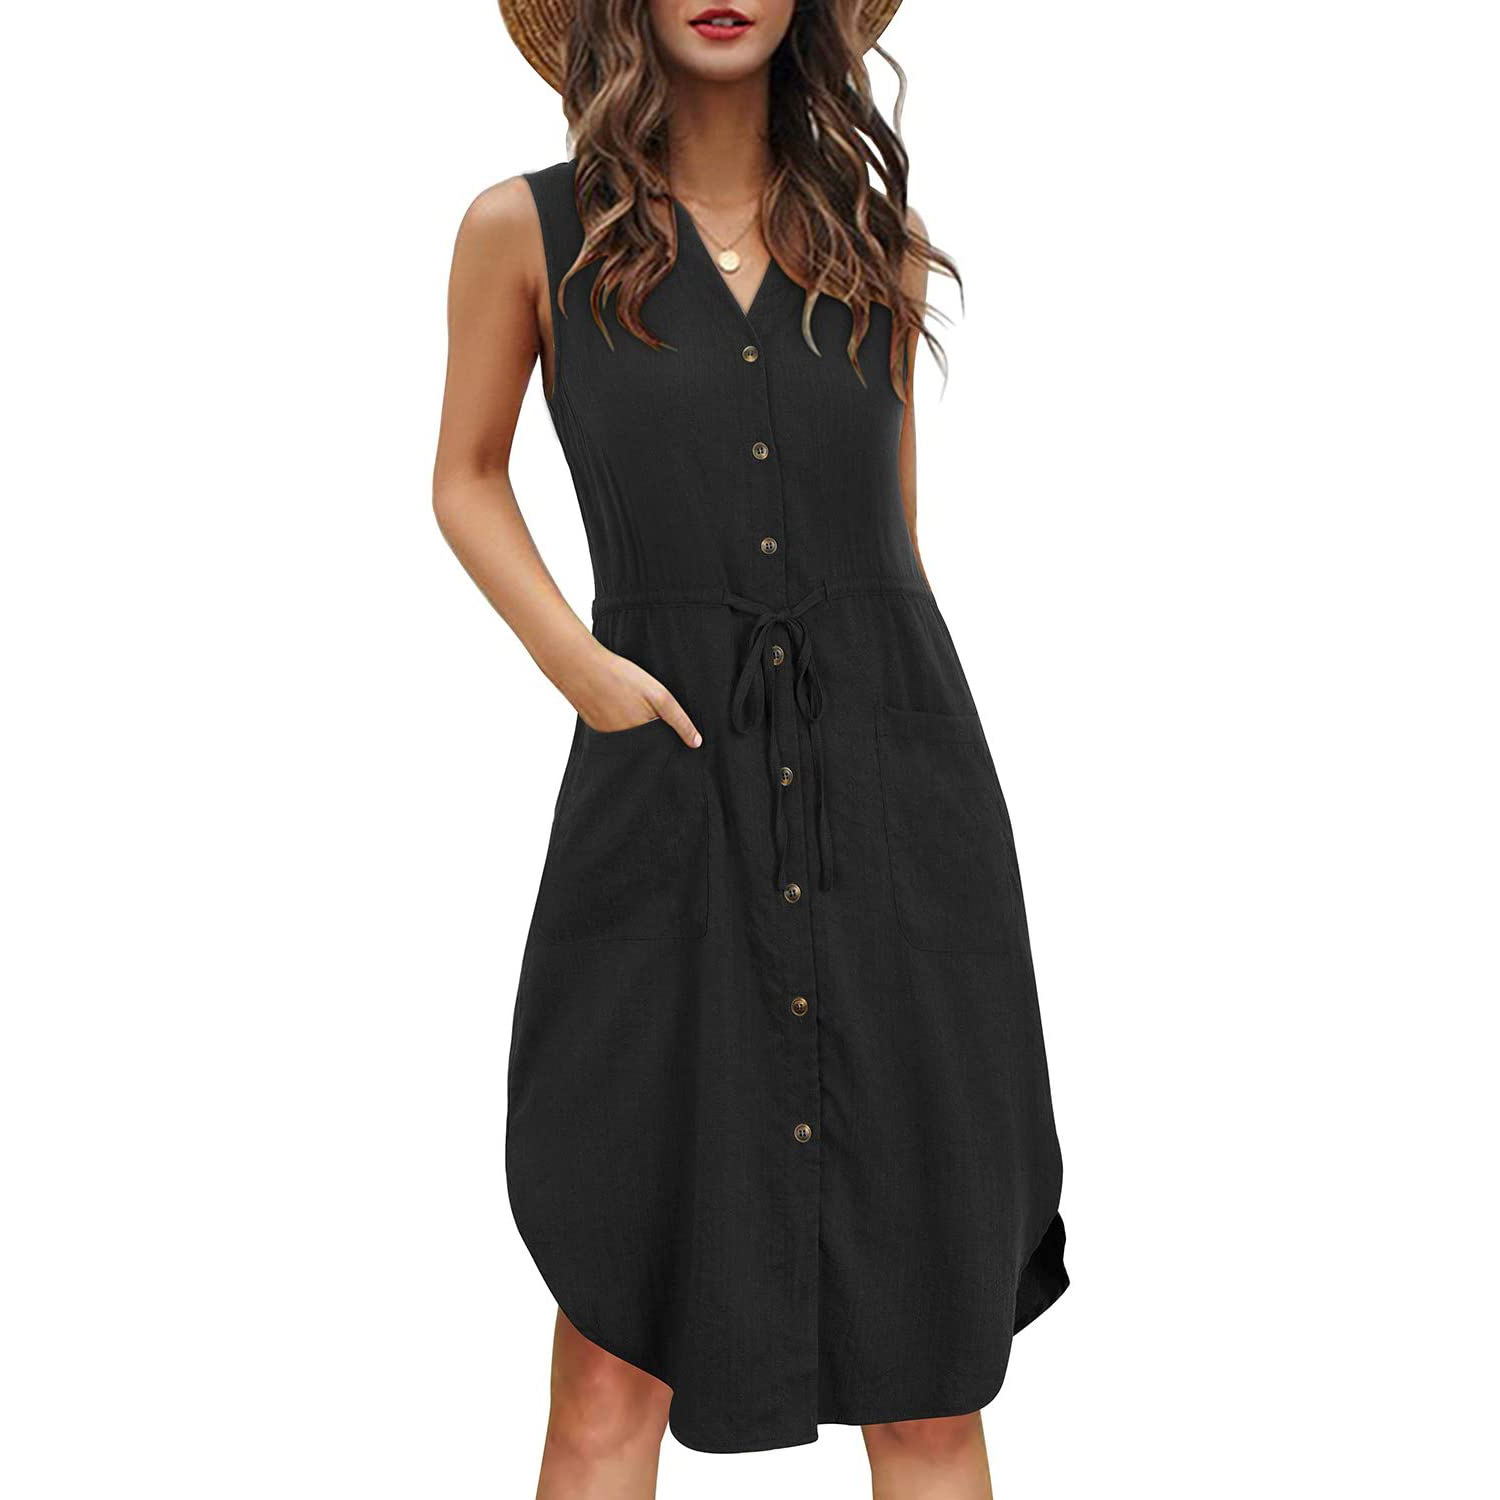 New Sling Button Pocket Dress - Black, Xxl